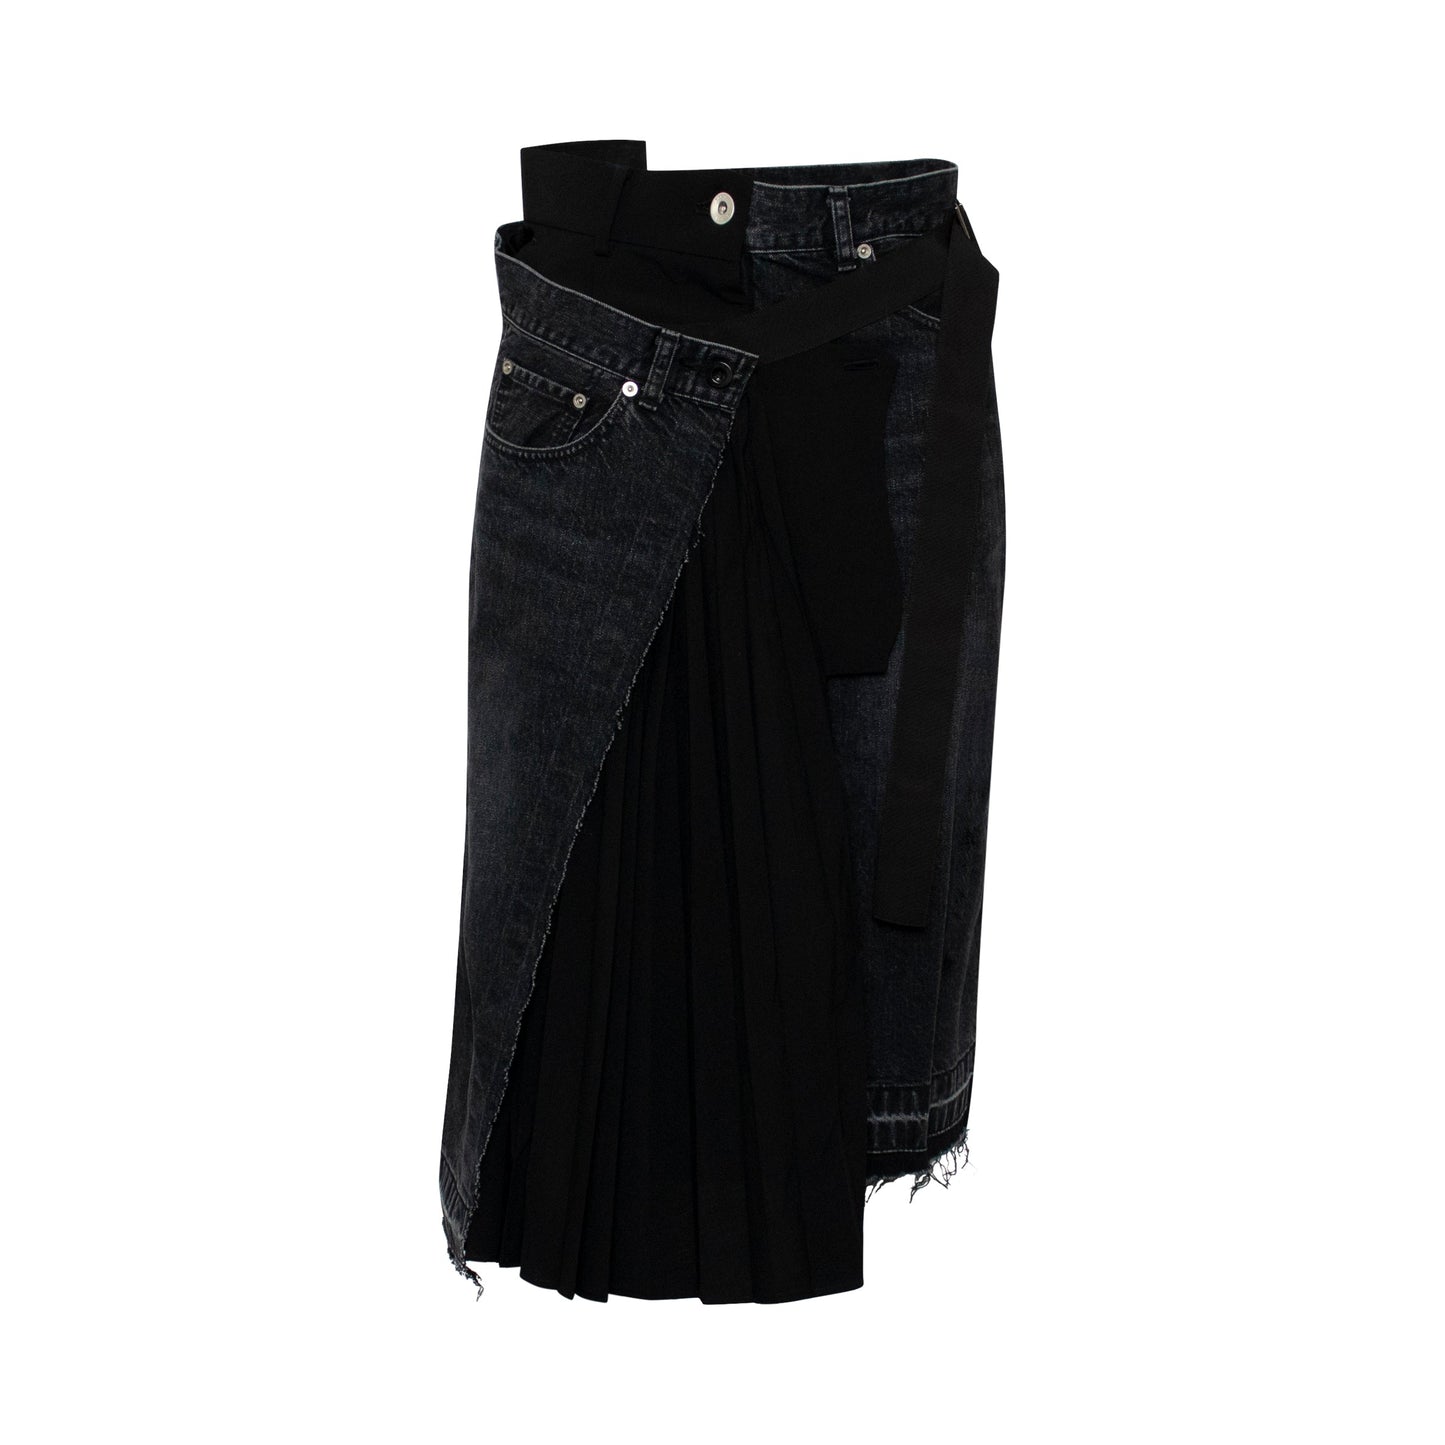 Denim x Suiting Skirt in Black